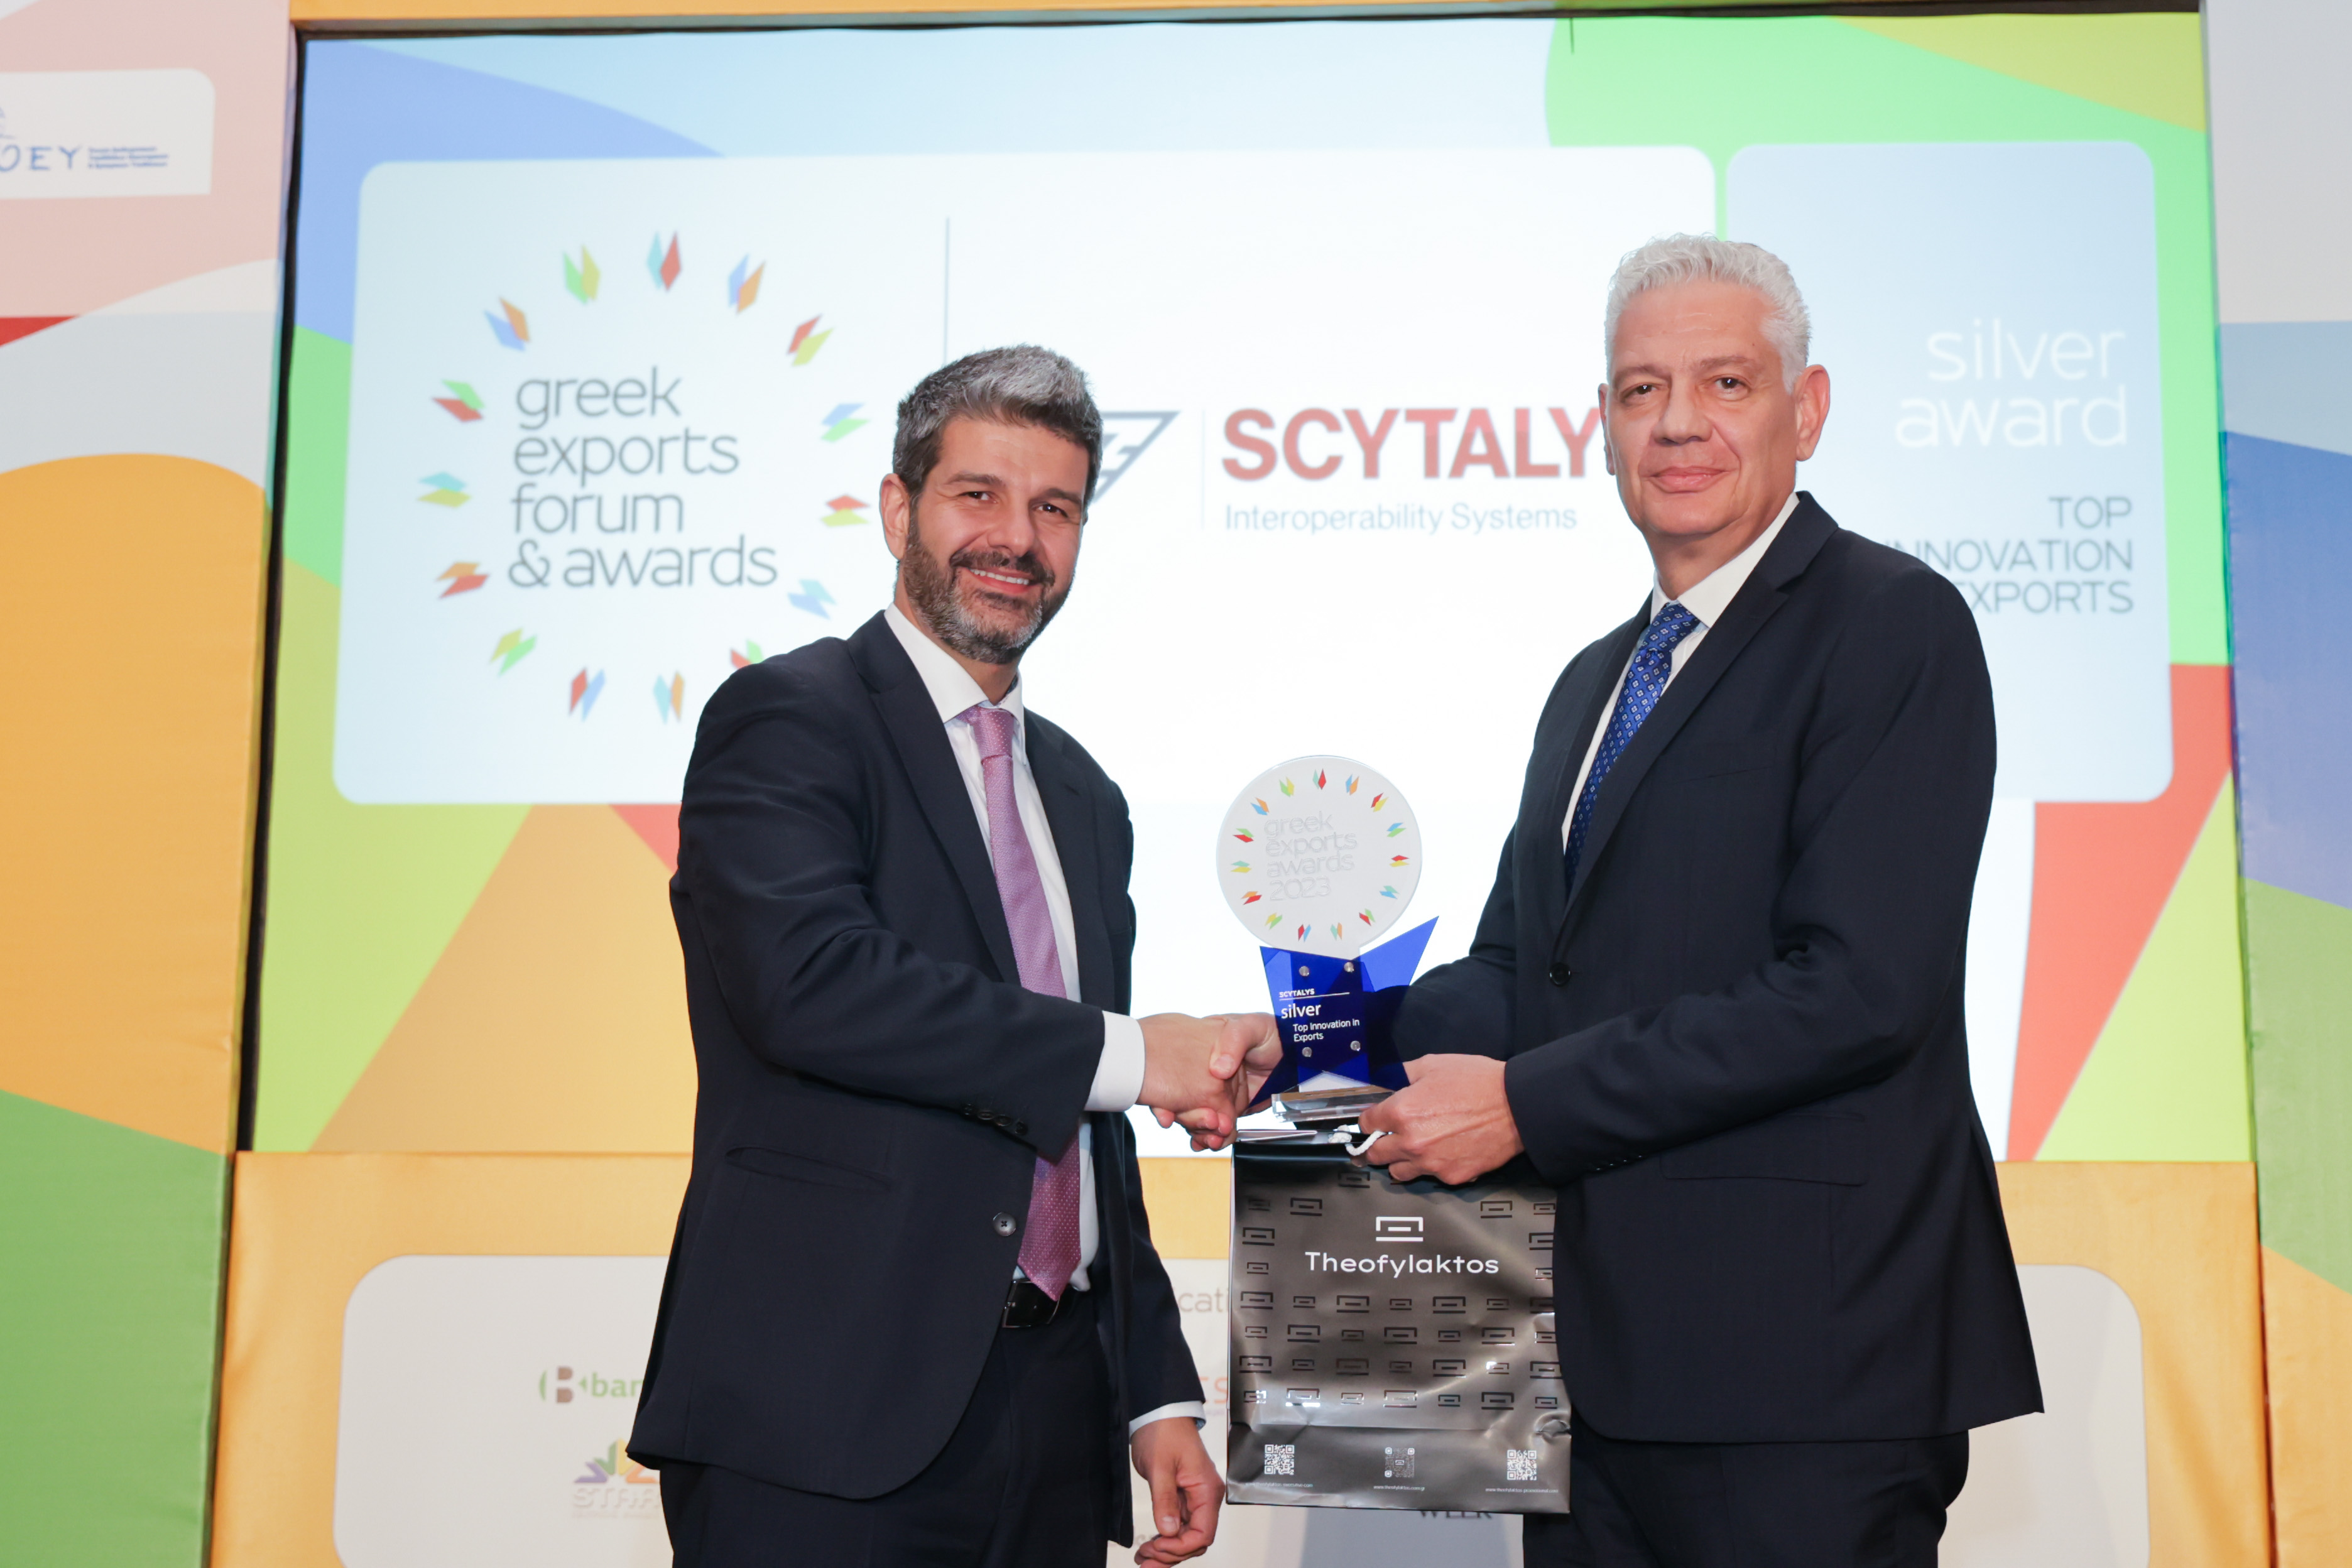 O Δημήτρης Καραντζάβελος, Πρόεδρος SCYTALYS, παραλαμβάνει το ασημένιο βραβείο στην κατηγορία Τop Innovation in Exports